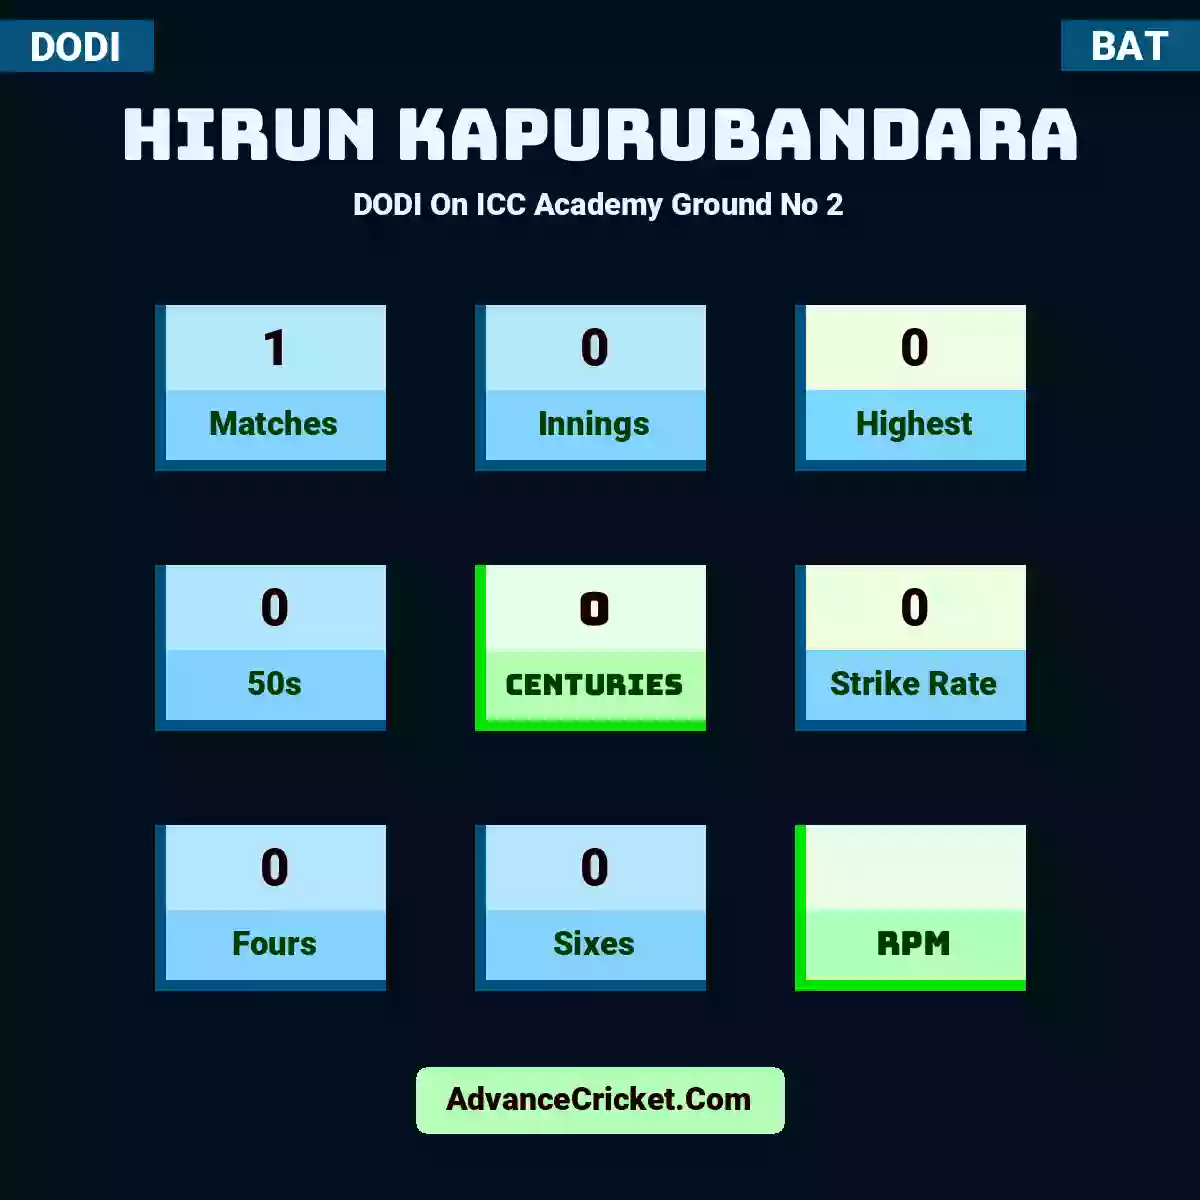 Hirun Kapurubandara DODI  On ICC Academy Ground No 2, Hirun Kapurubandara played 1 matches, scored 0 runs as highest, 0 half-centuries, and 0 centuries, with a strike rate of 0. H.Kapurubandara hit 0 fours and 0 sixes.